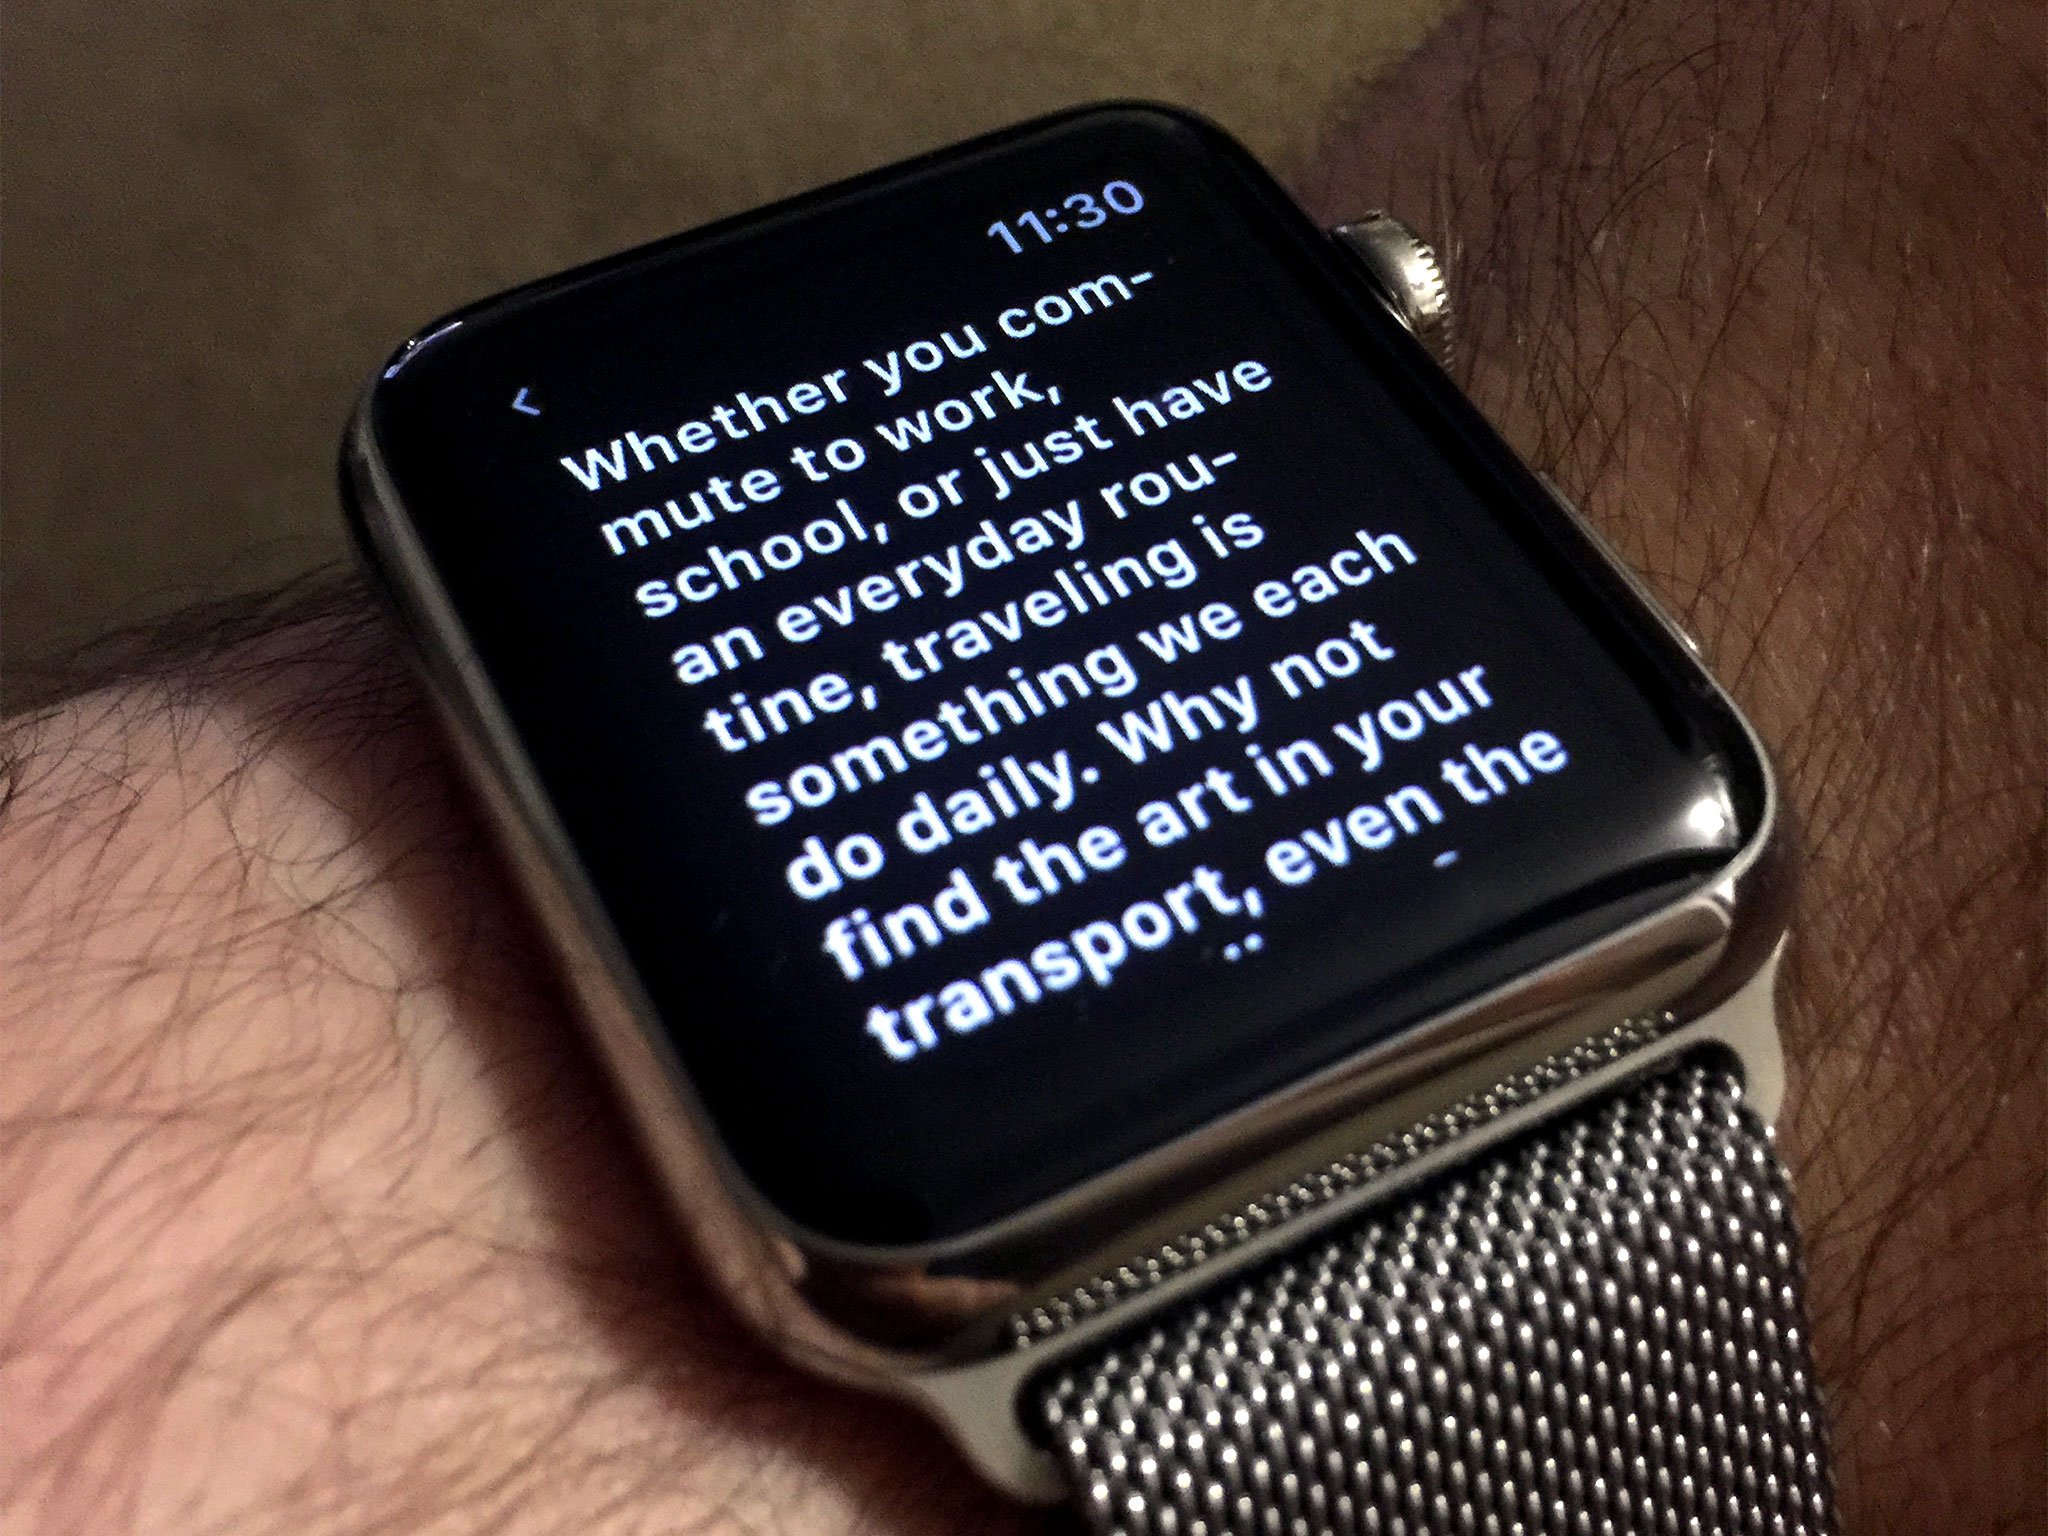 apple-watch-bold-text-hero.jpg